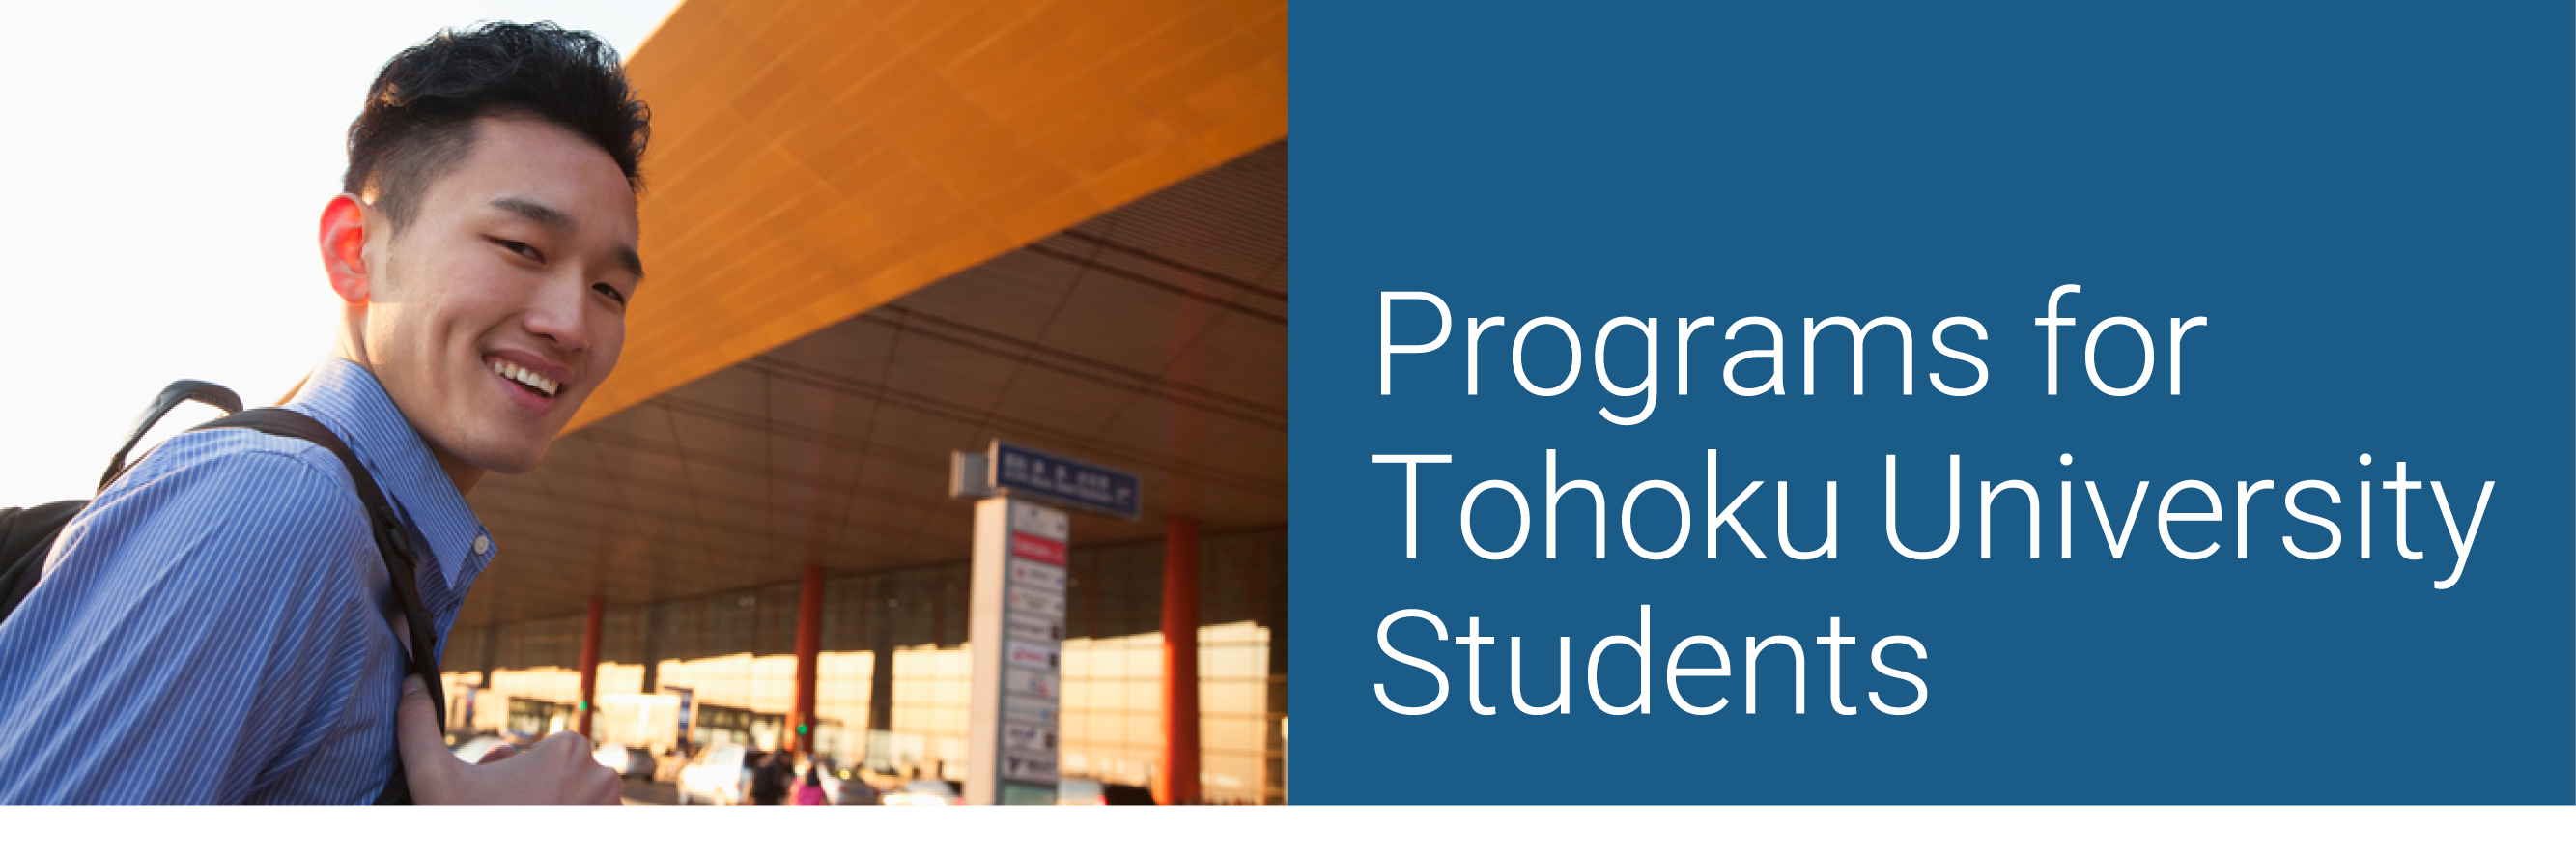 For Tohoku University Students